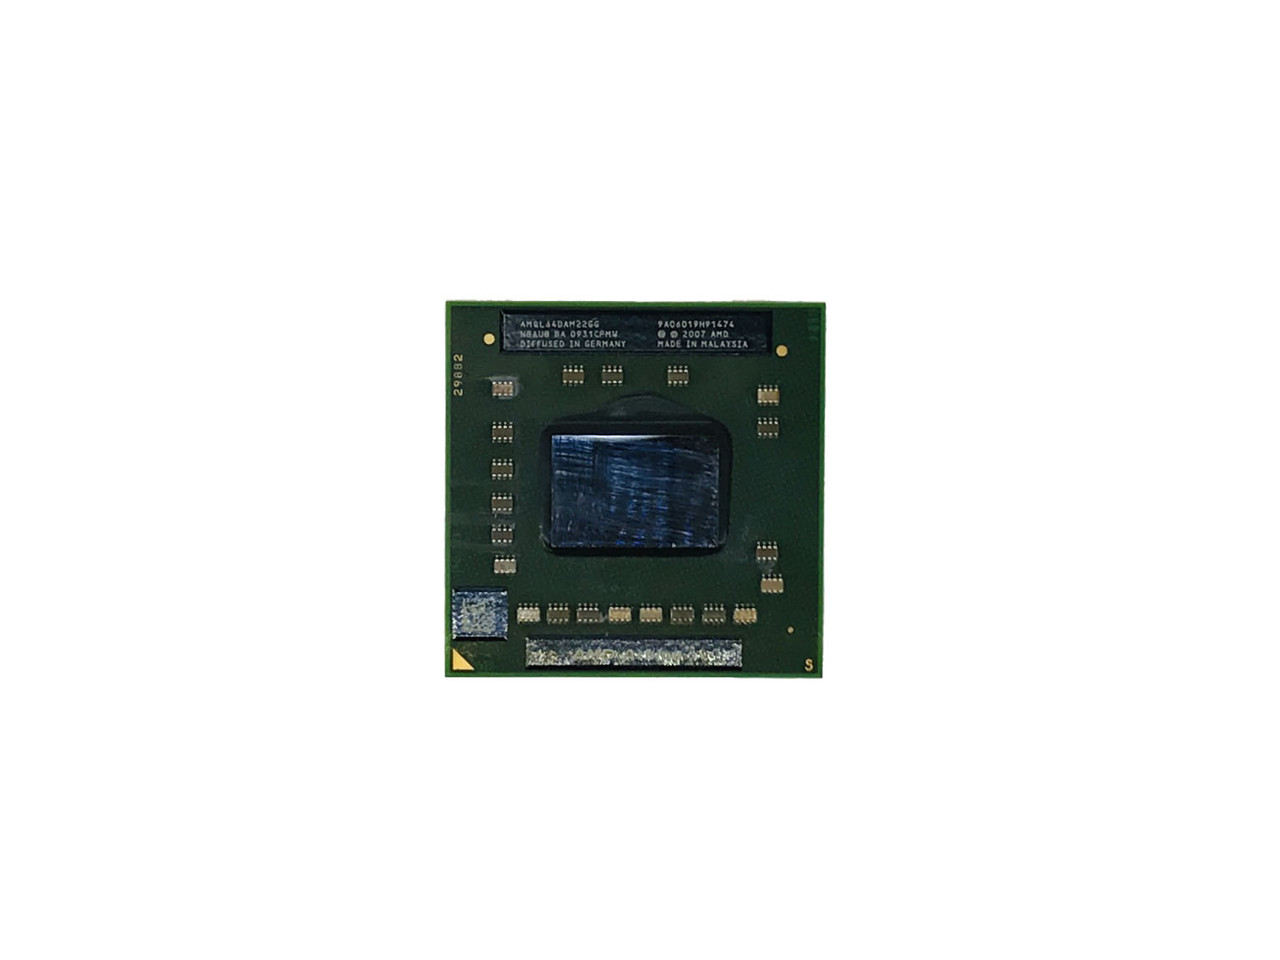 Процессор AMD Athlon 64x2 QL-64 AMQL64DAM22GG